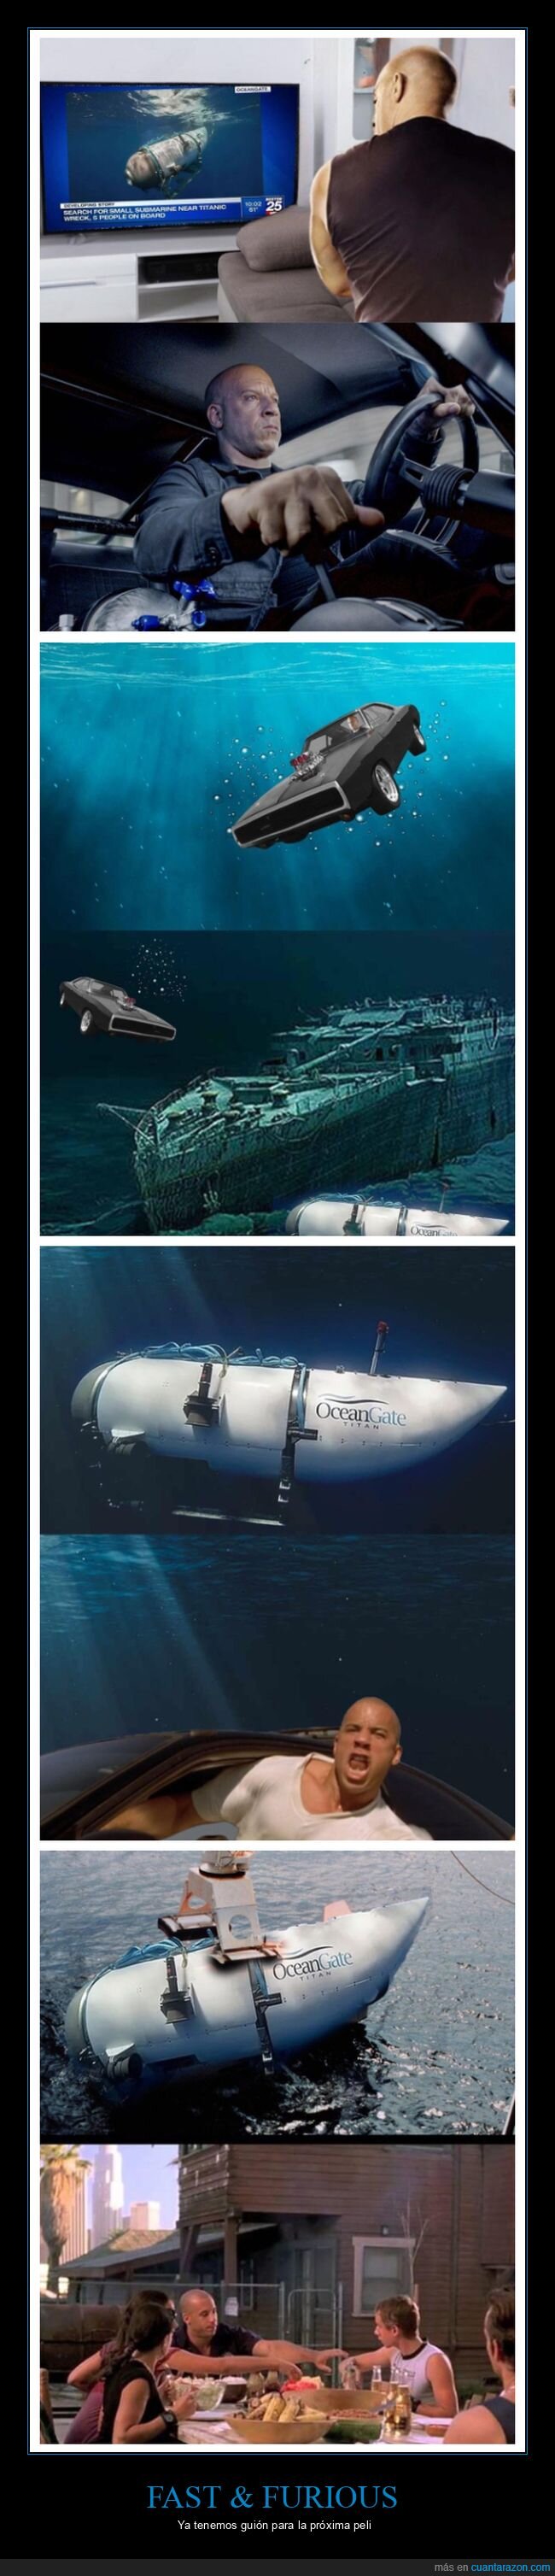 fast & furious,titan,submarino,titanic